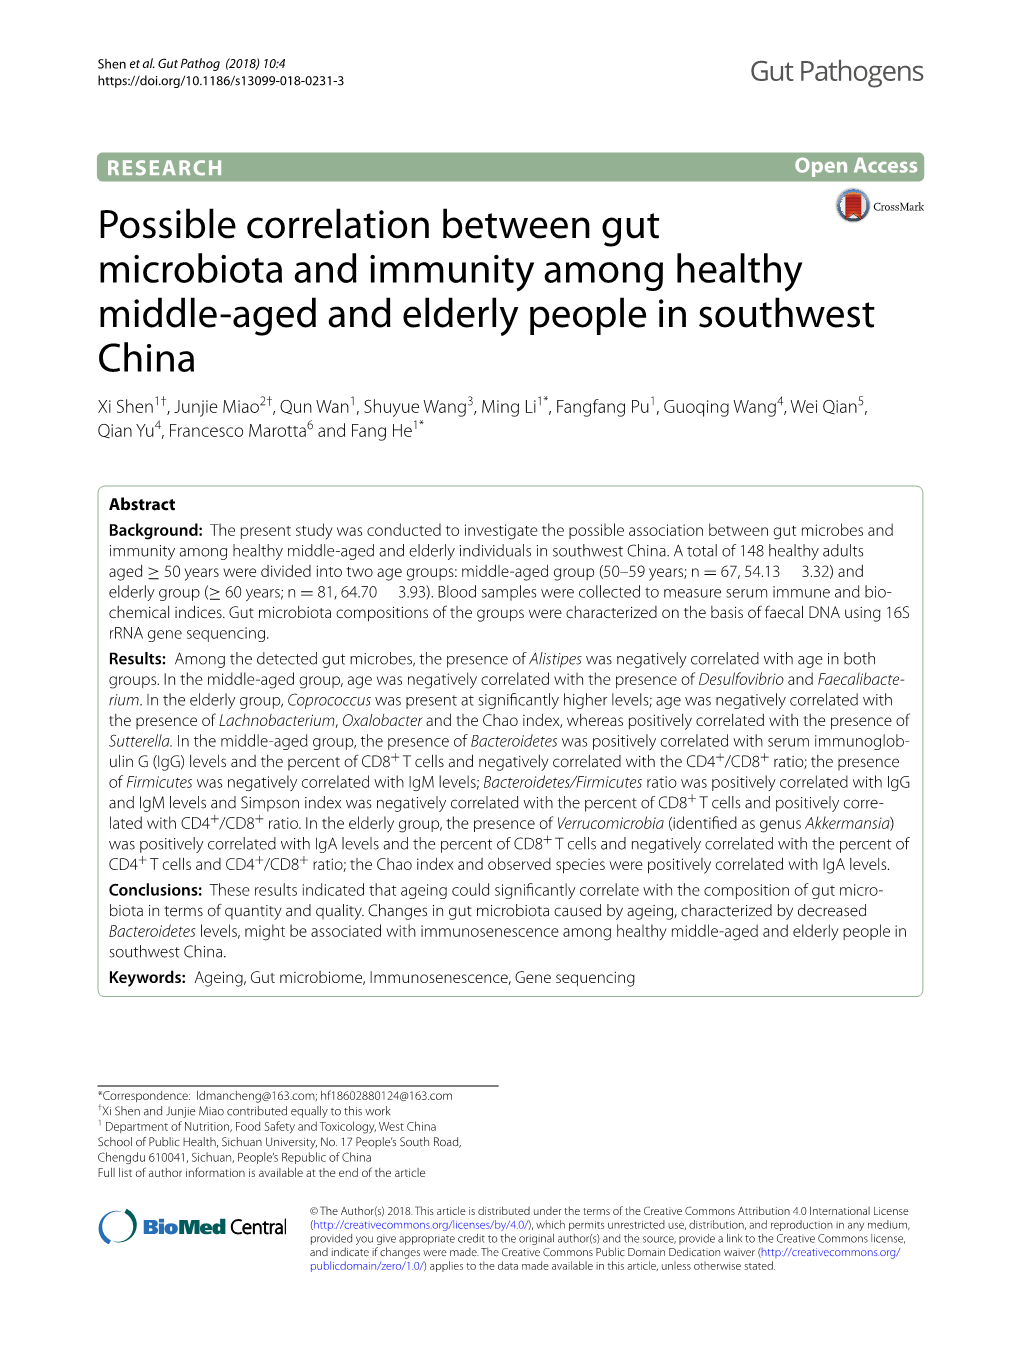 Possible Correlation Between Gut Microbiota and Immunity Among